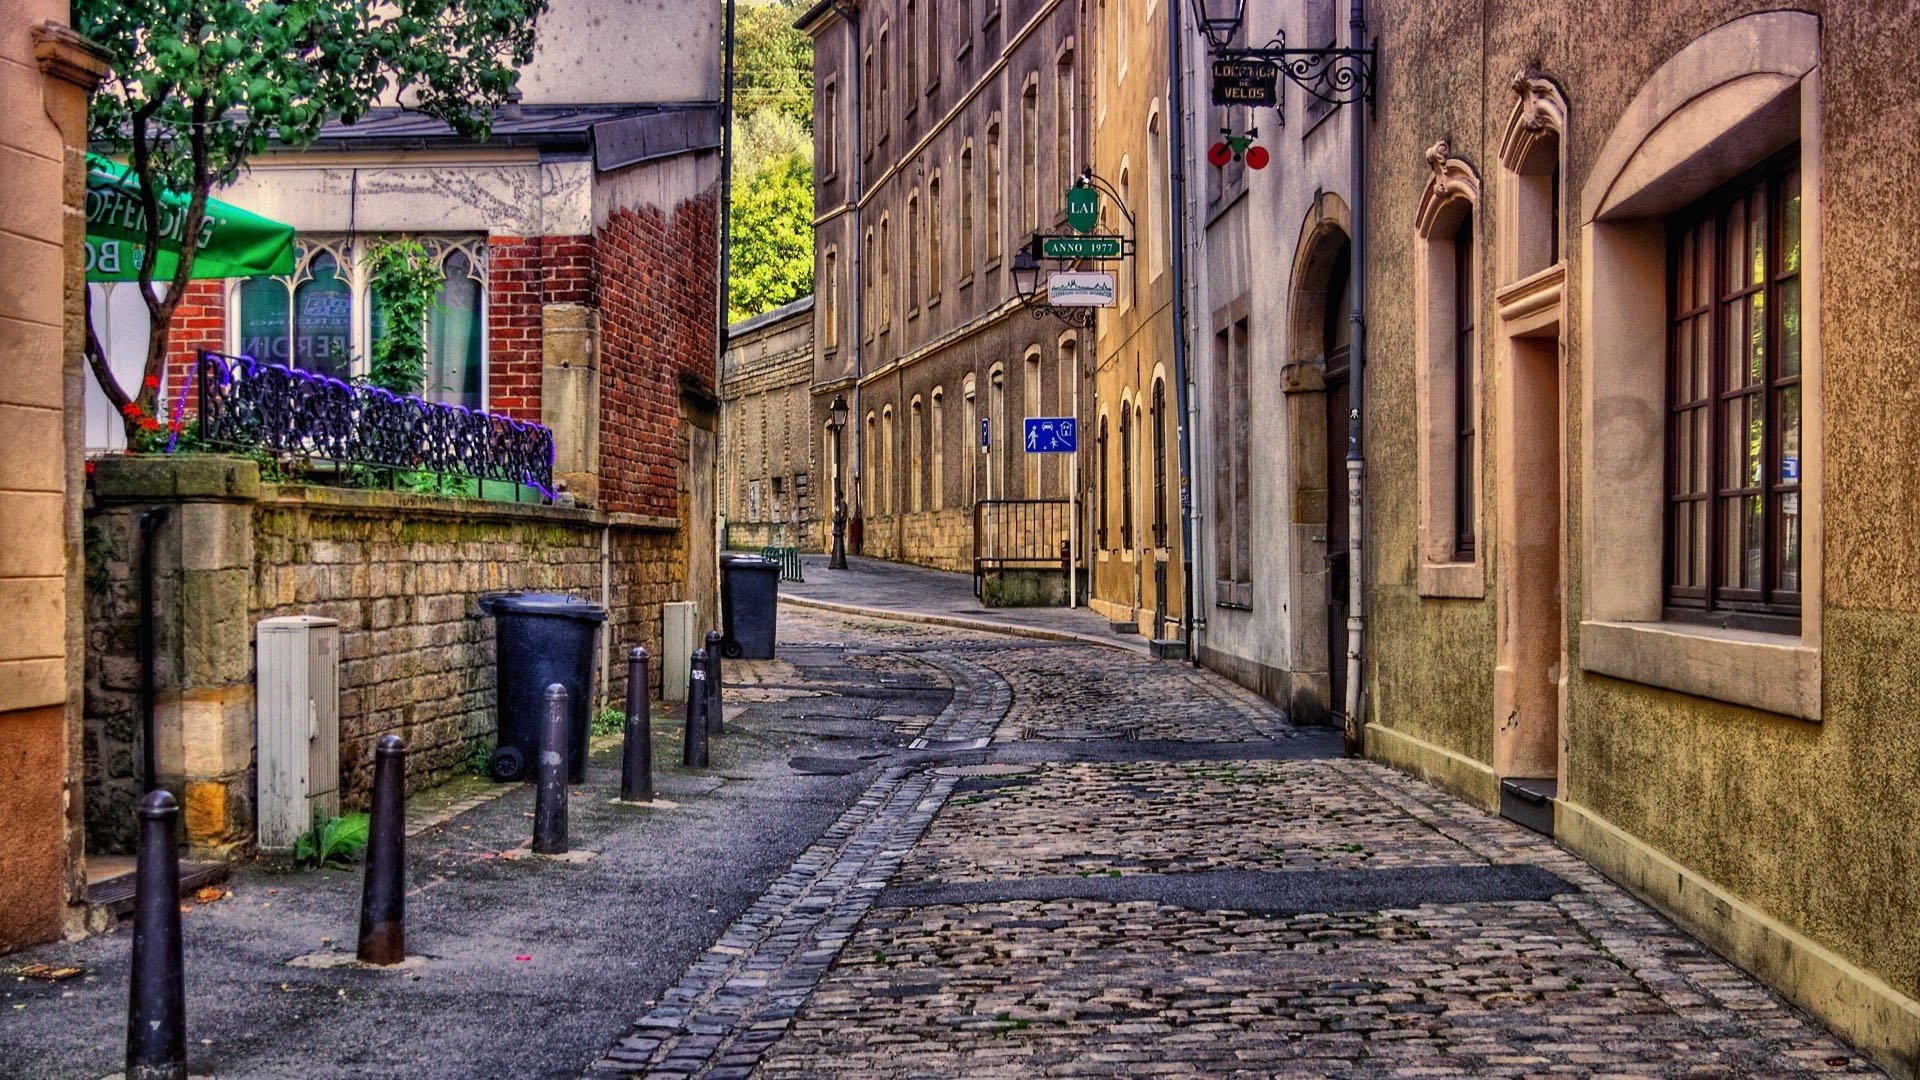 Франция 19 век фон улица